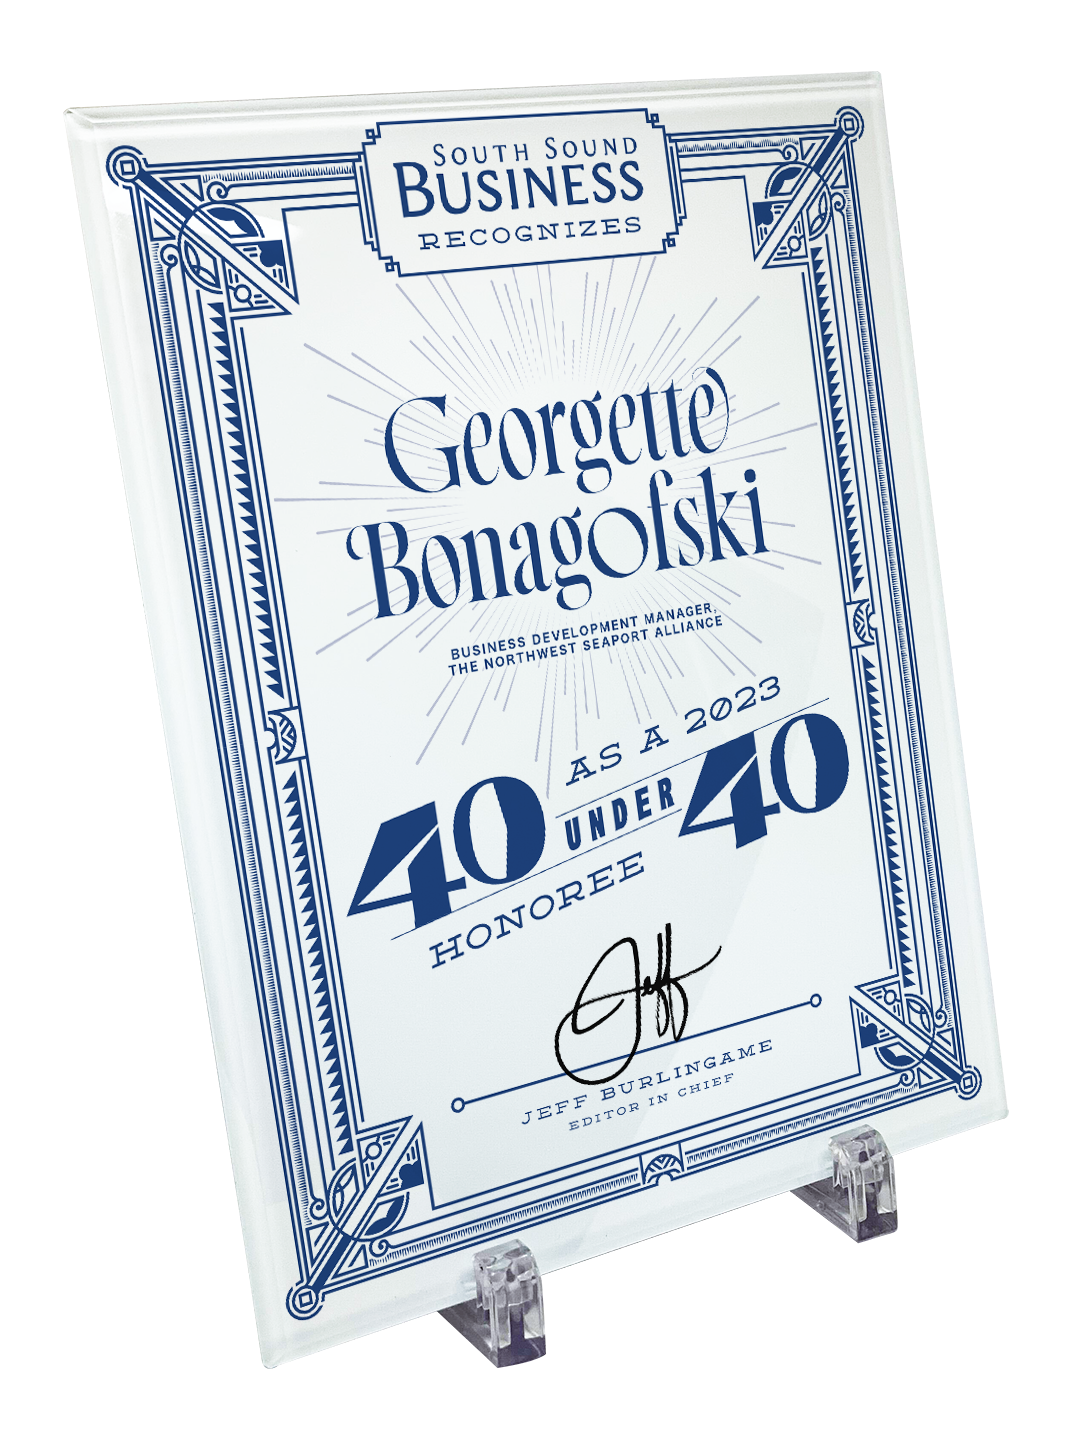 South Sound Business Magazine 40 Under 40 Awards - Crystal Glass